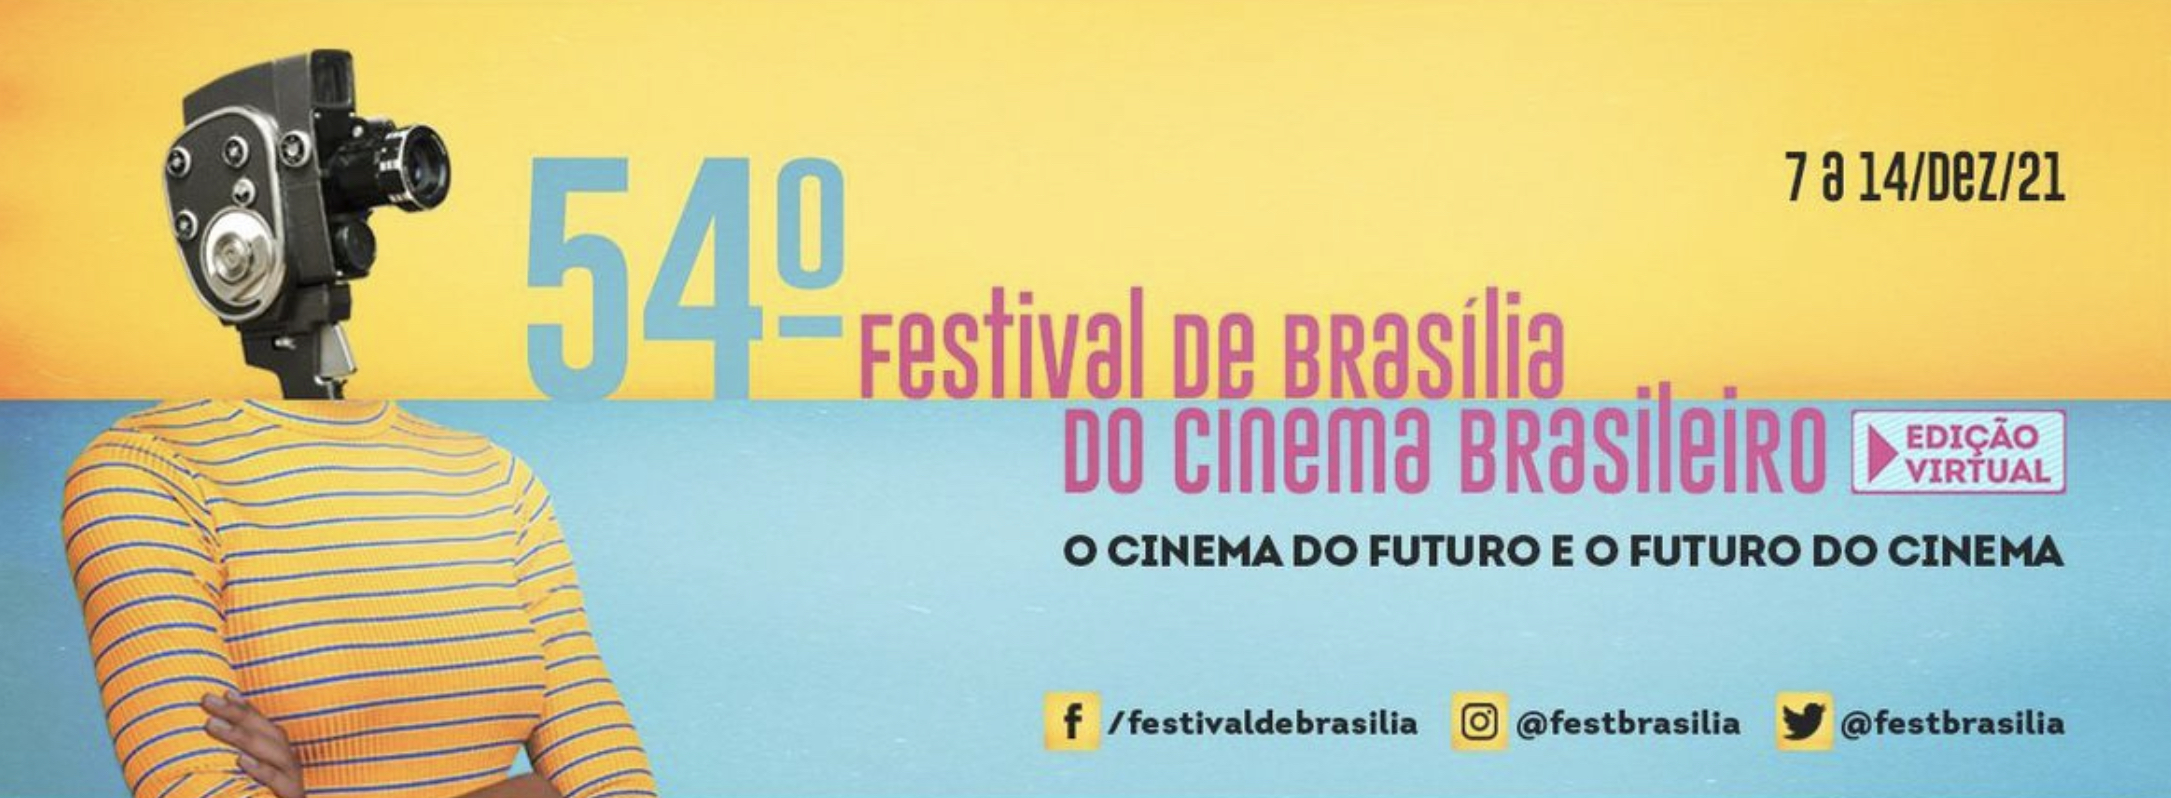 54o festival de brasília do cinema brasileiro